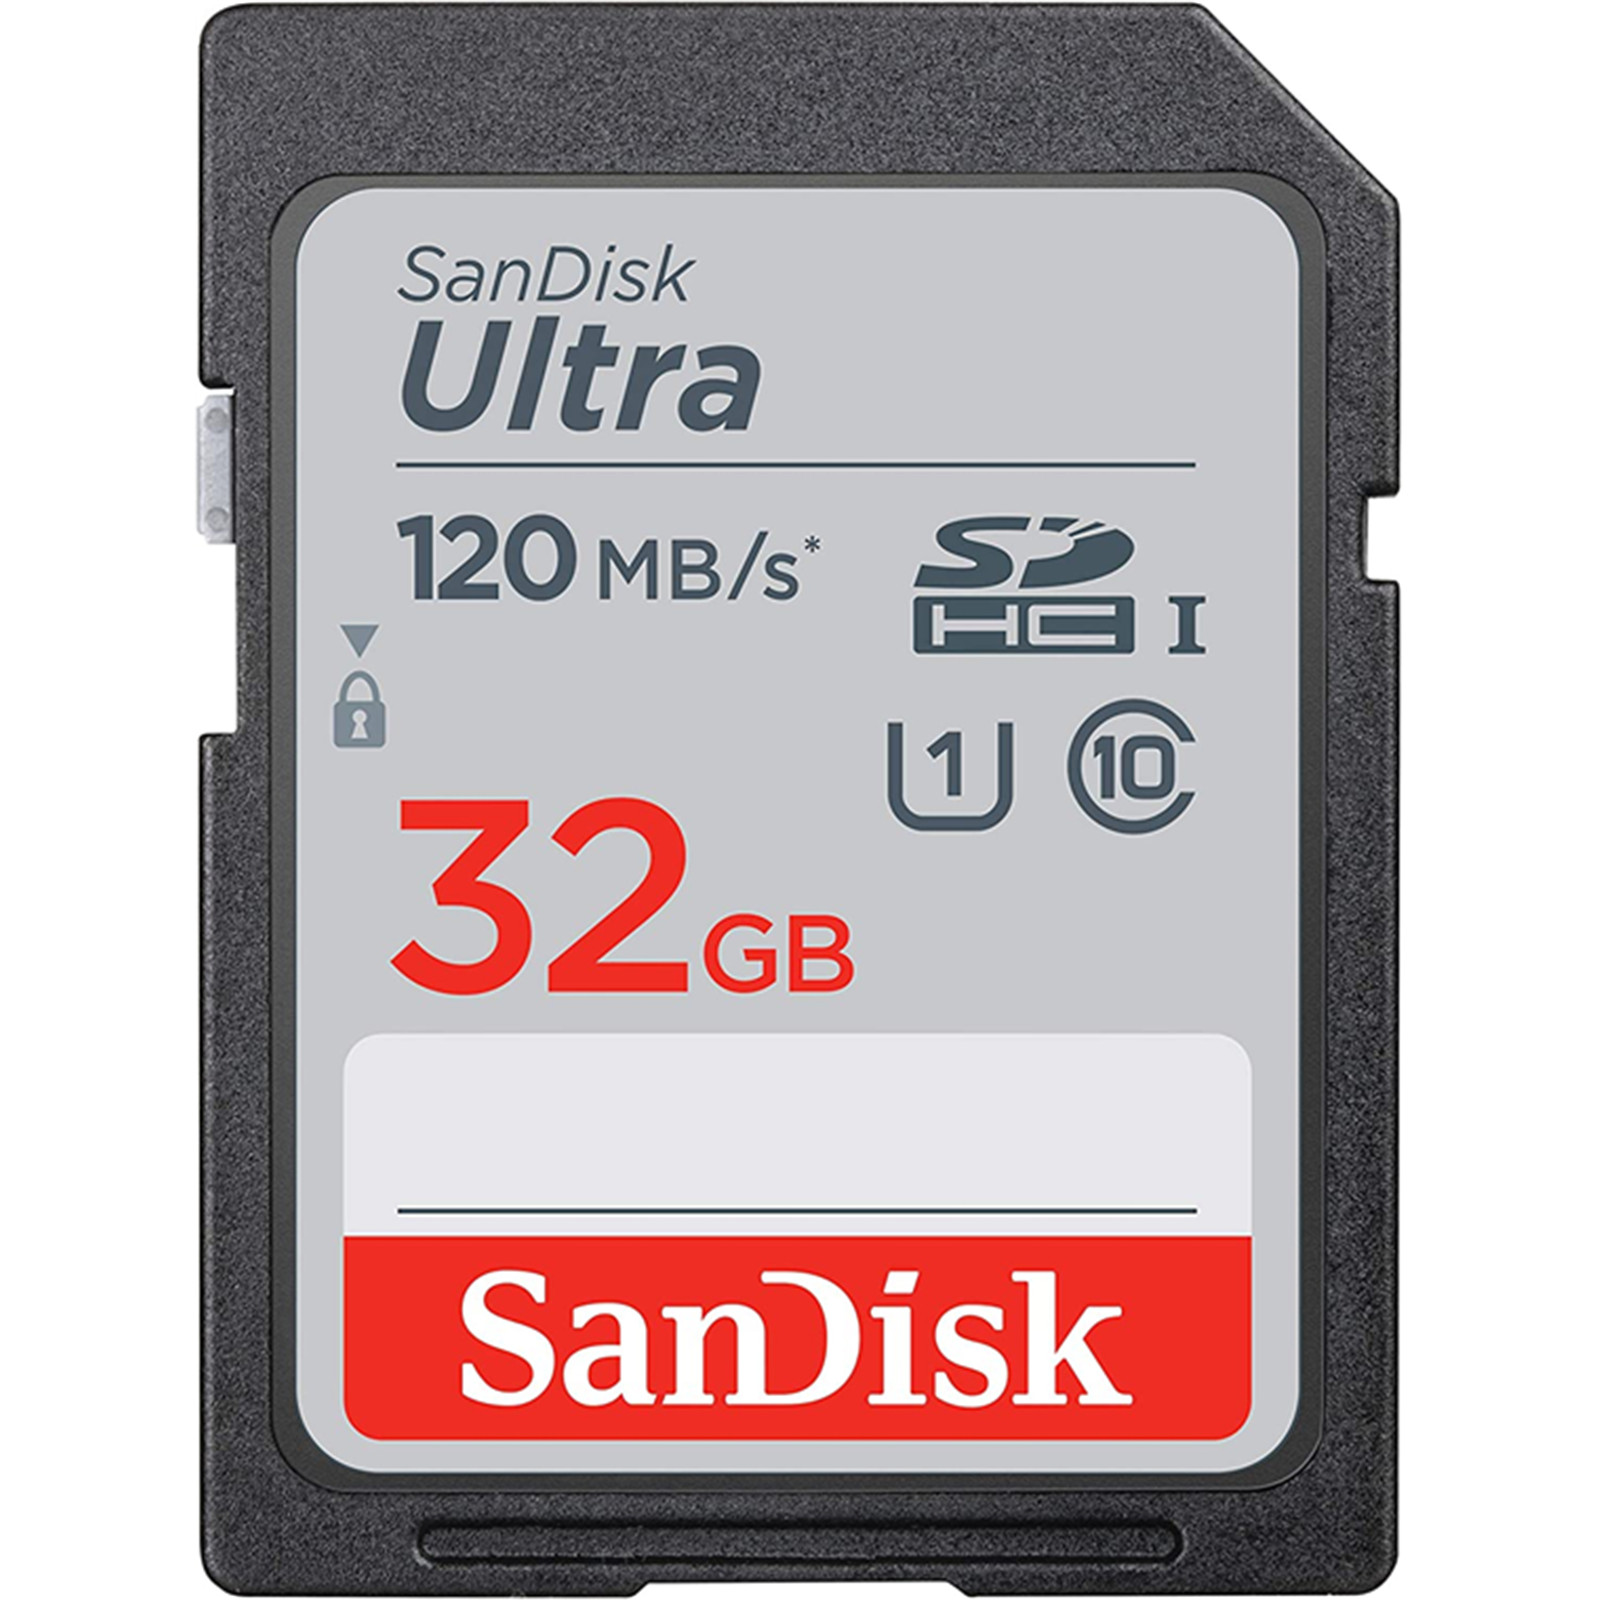 SanDisk SD Ultra SDHC Memory Card - 32GB (120MB)